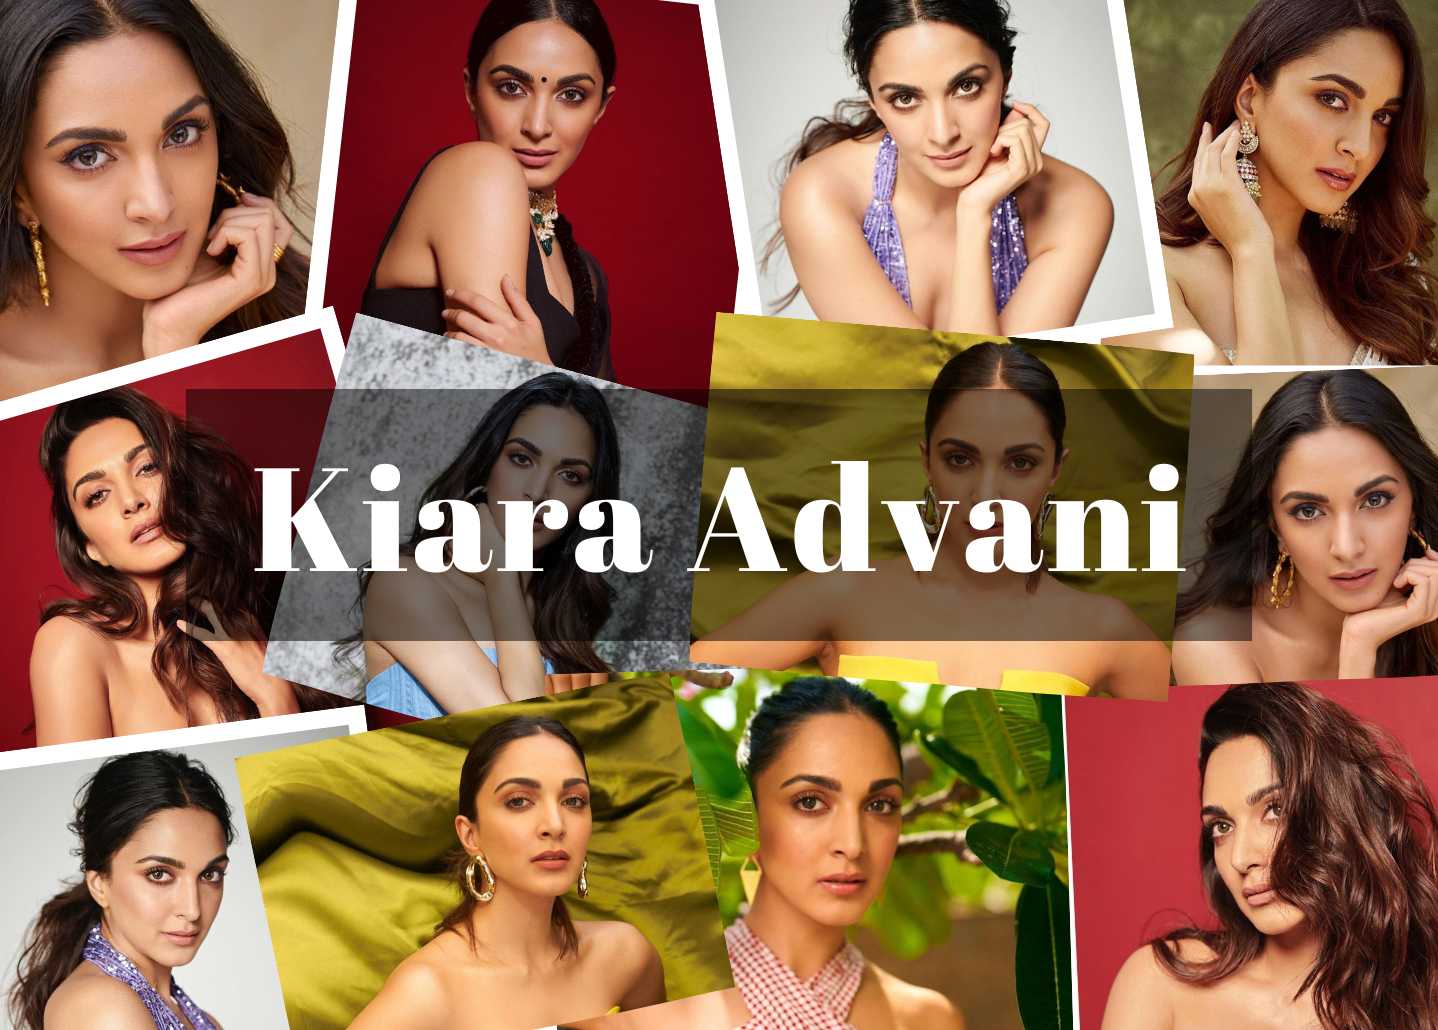 Kiara Advani| Movies, Age, Biography, Family, Struggle,Story